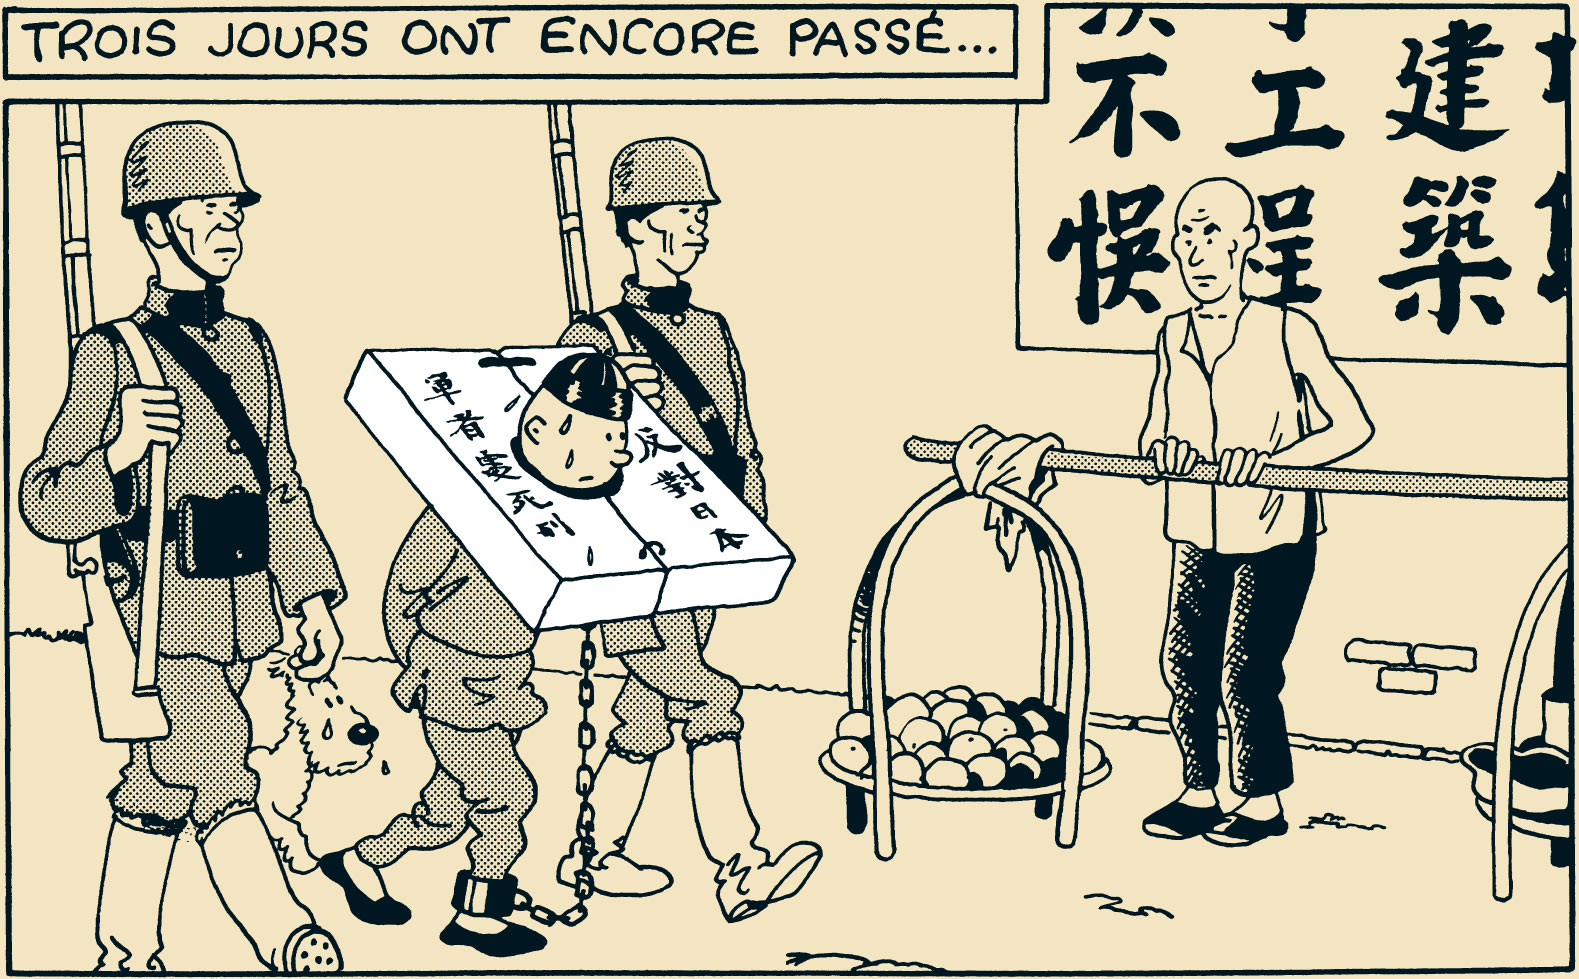 TintinCensored-0000.jpg